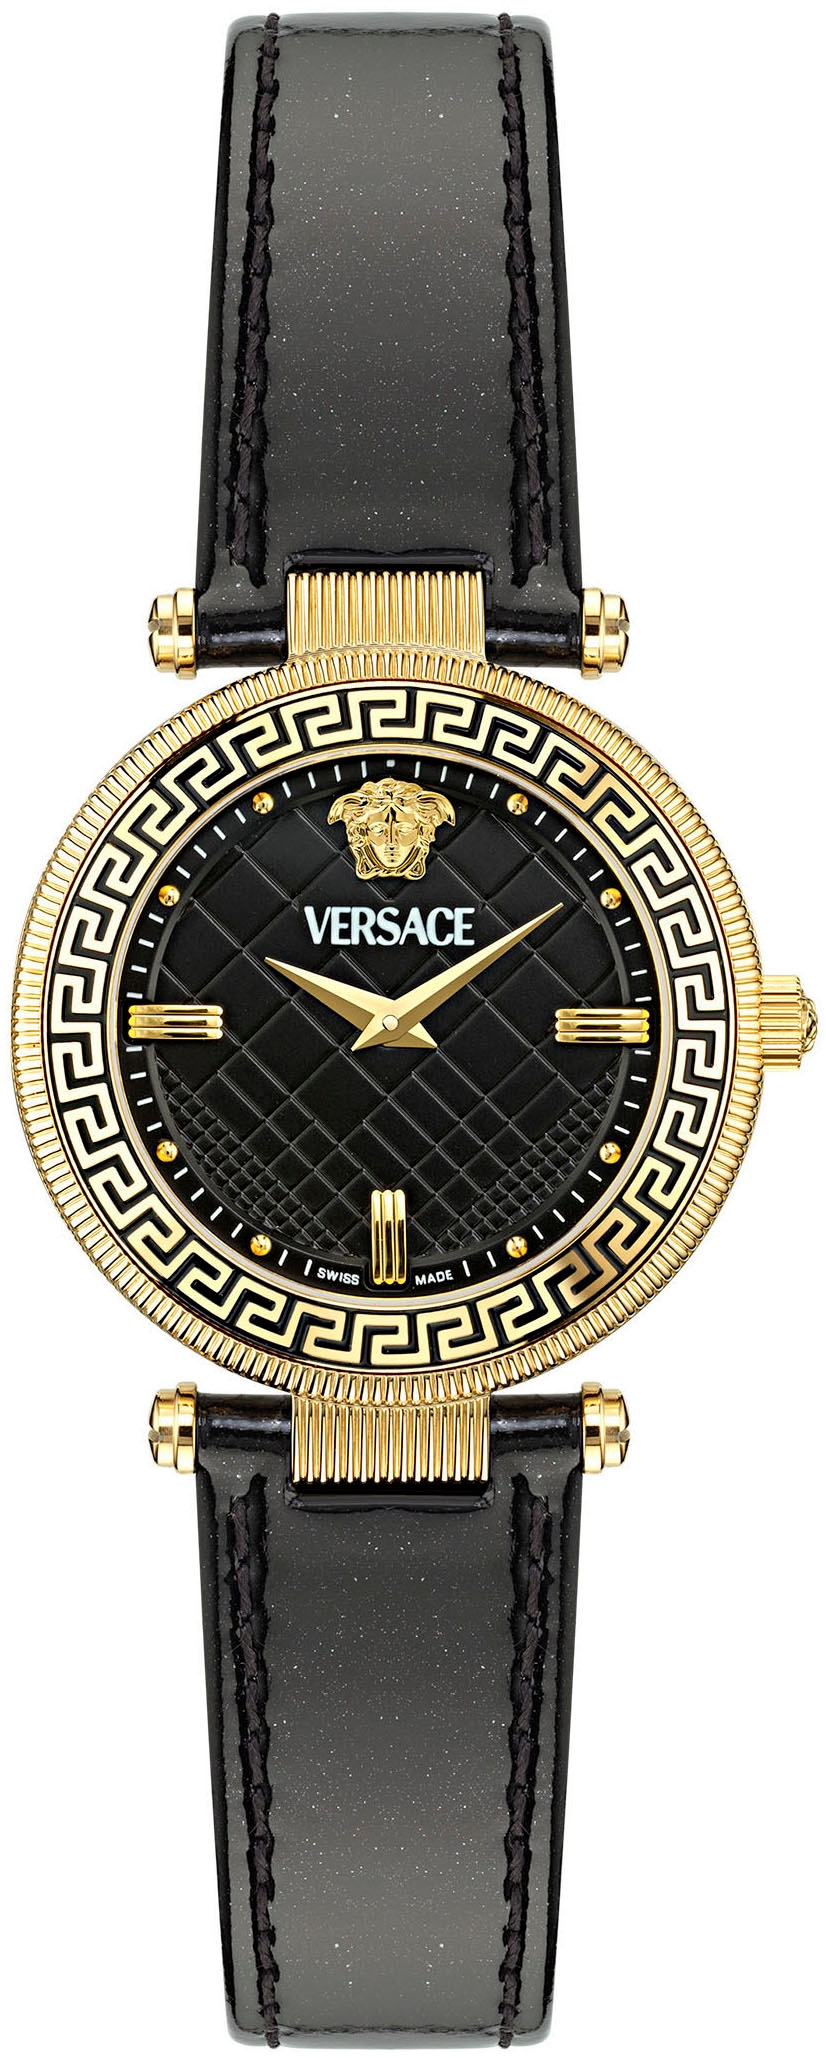 Versace Quarzuhr »REVE«, Armbanduhr, Damenuhr, Saphirglas, Swiss Made